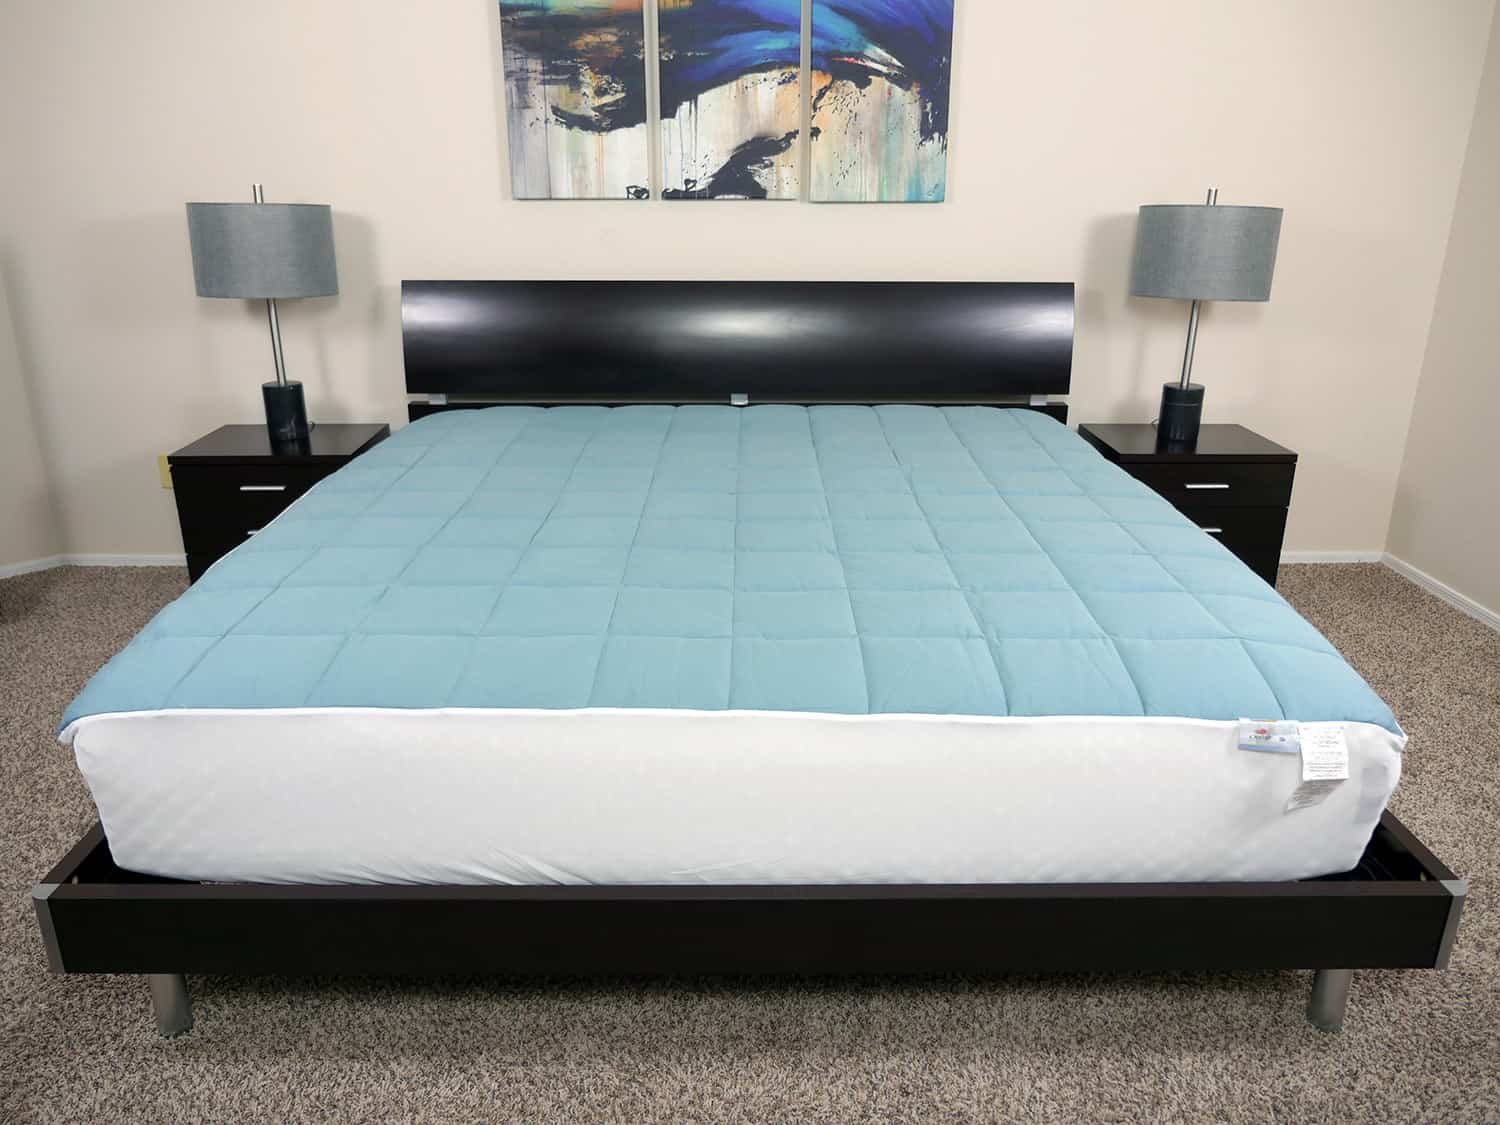 slumber mattress in a box review